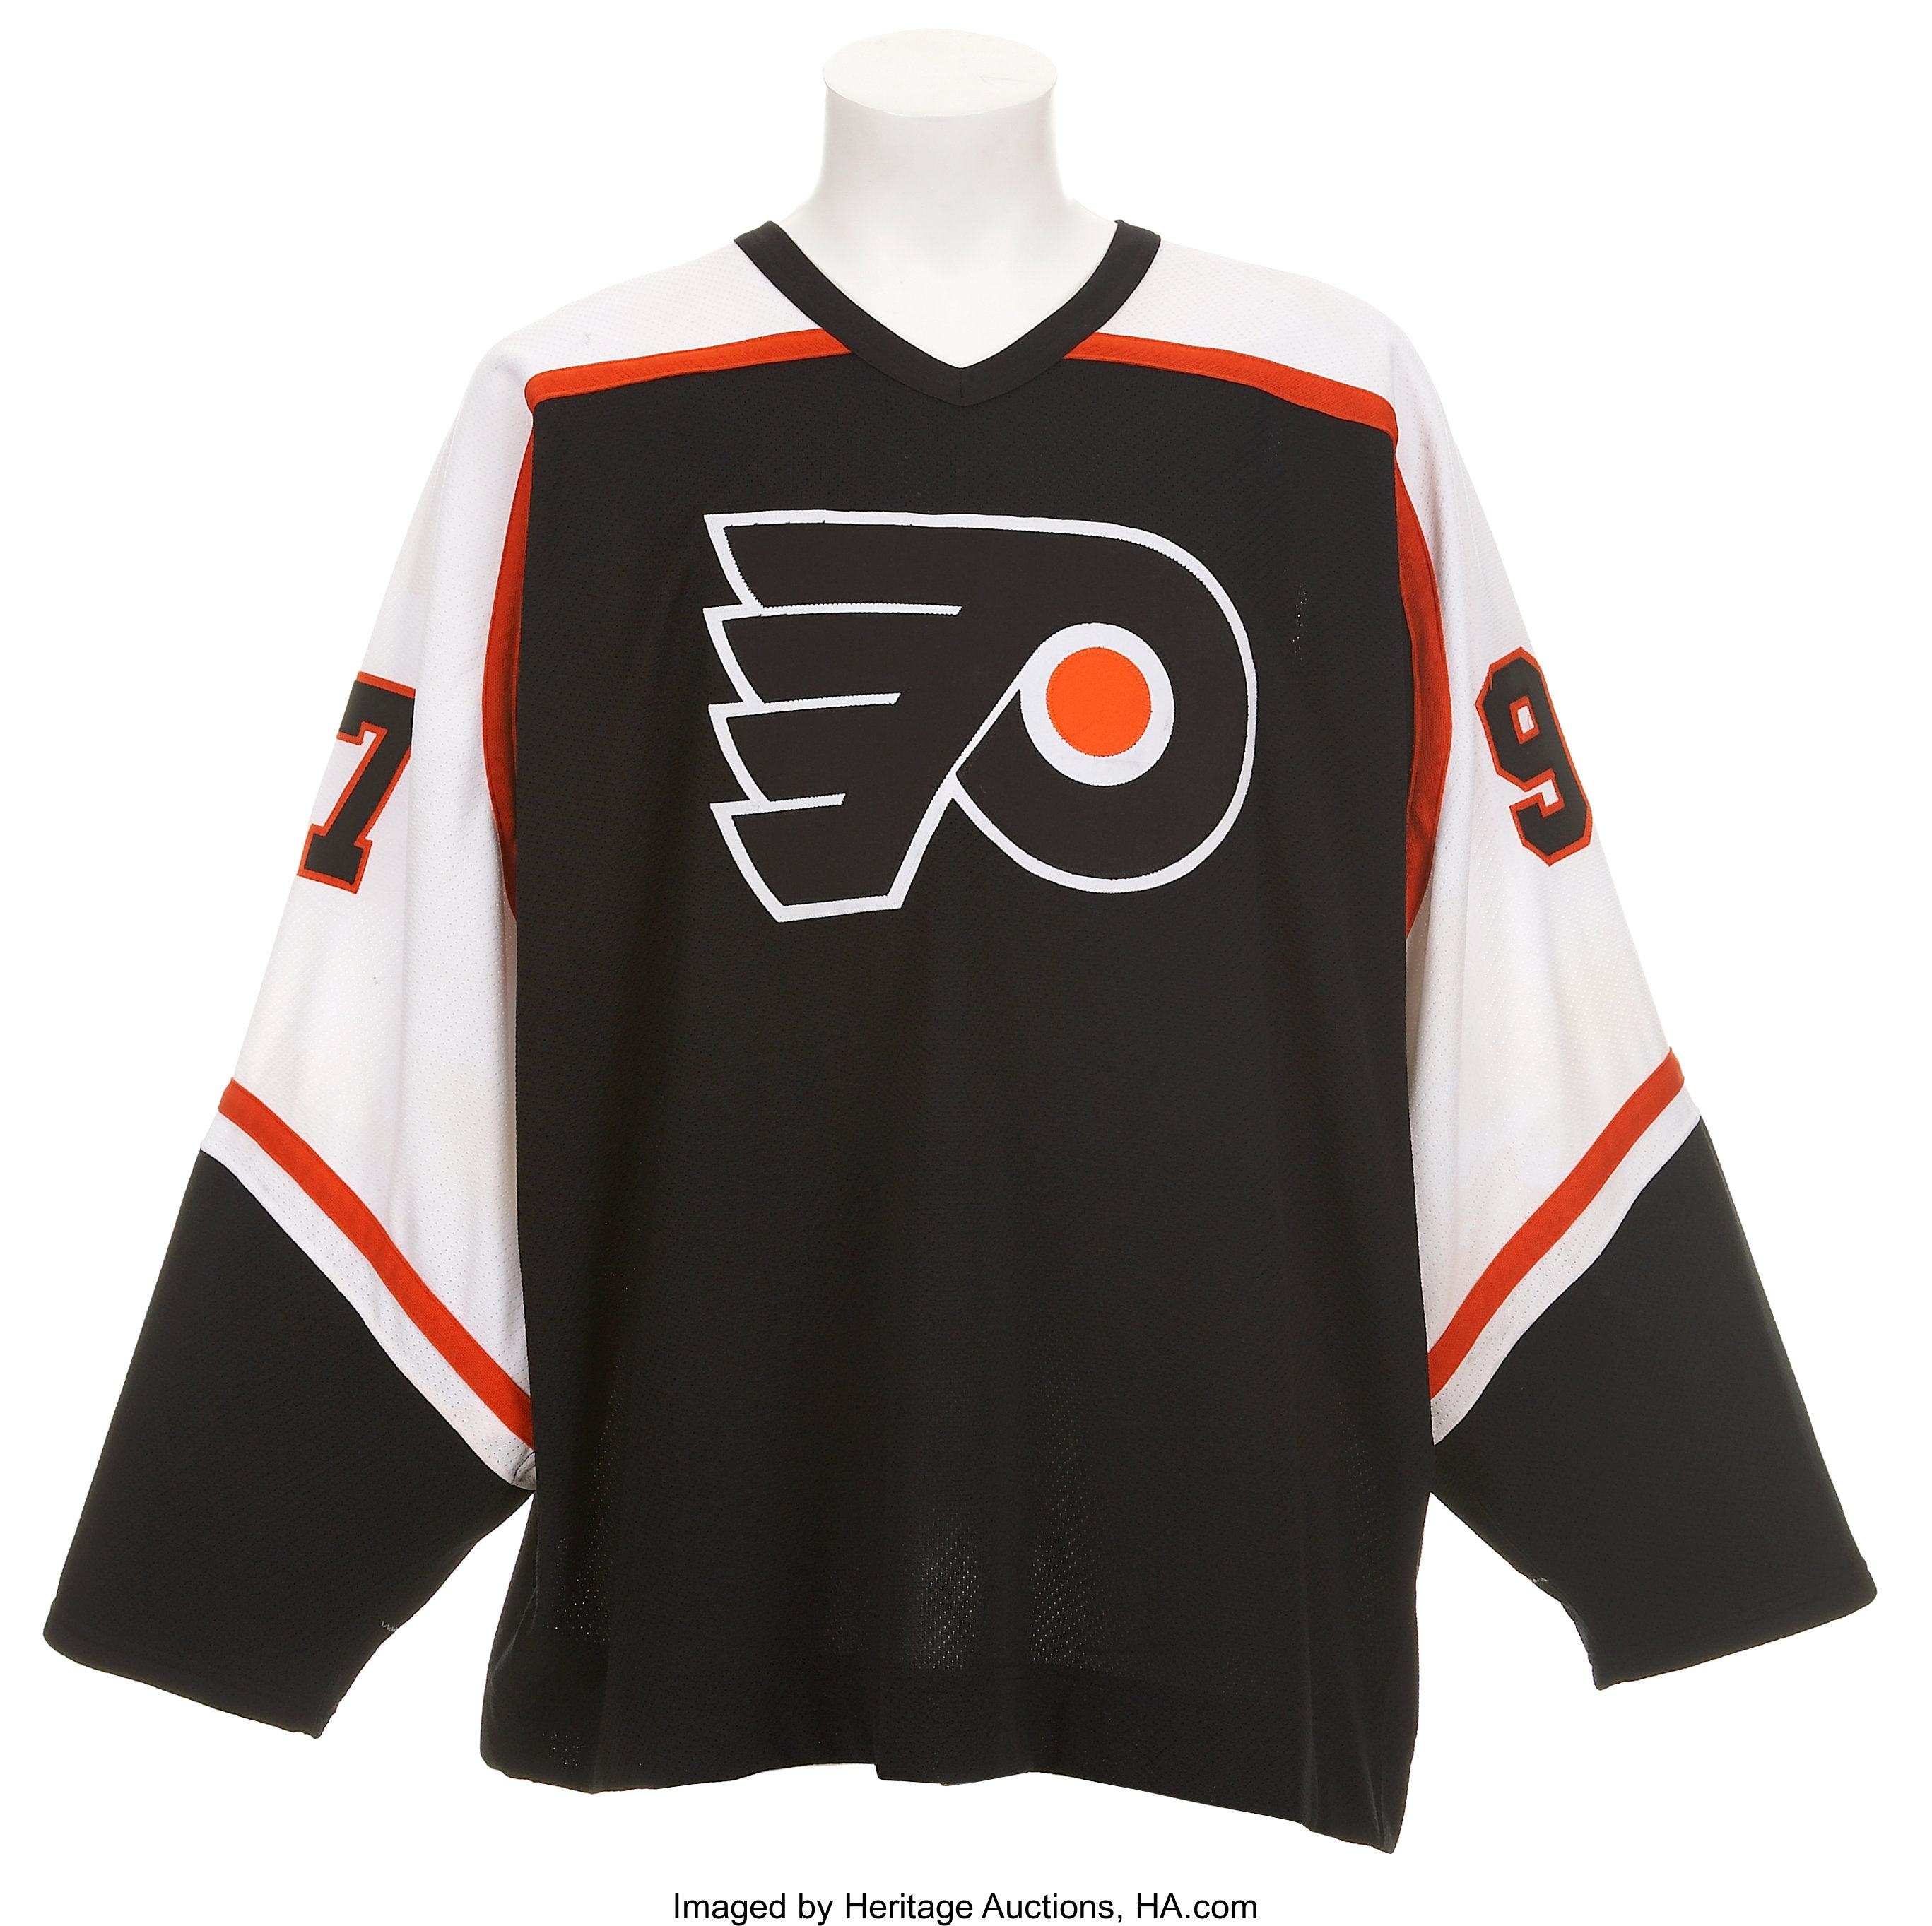 Jeremy Roenick Philadelphia Flyers Authentic Autographed Jersey